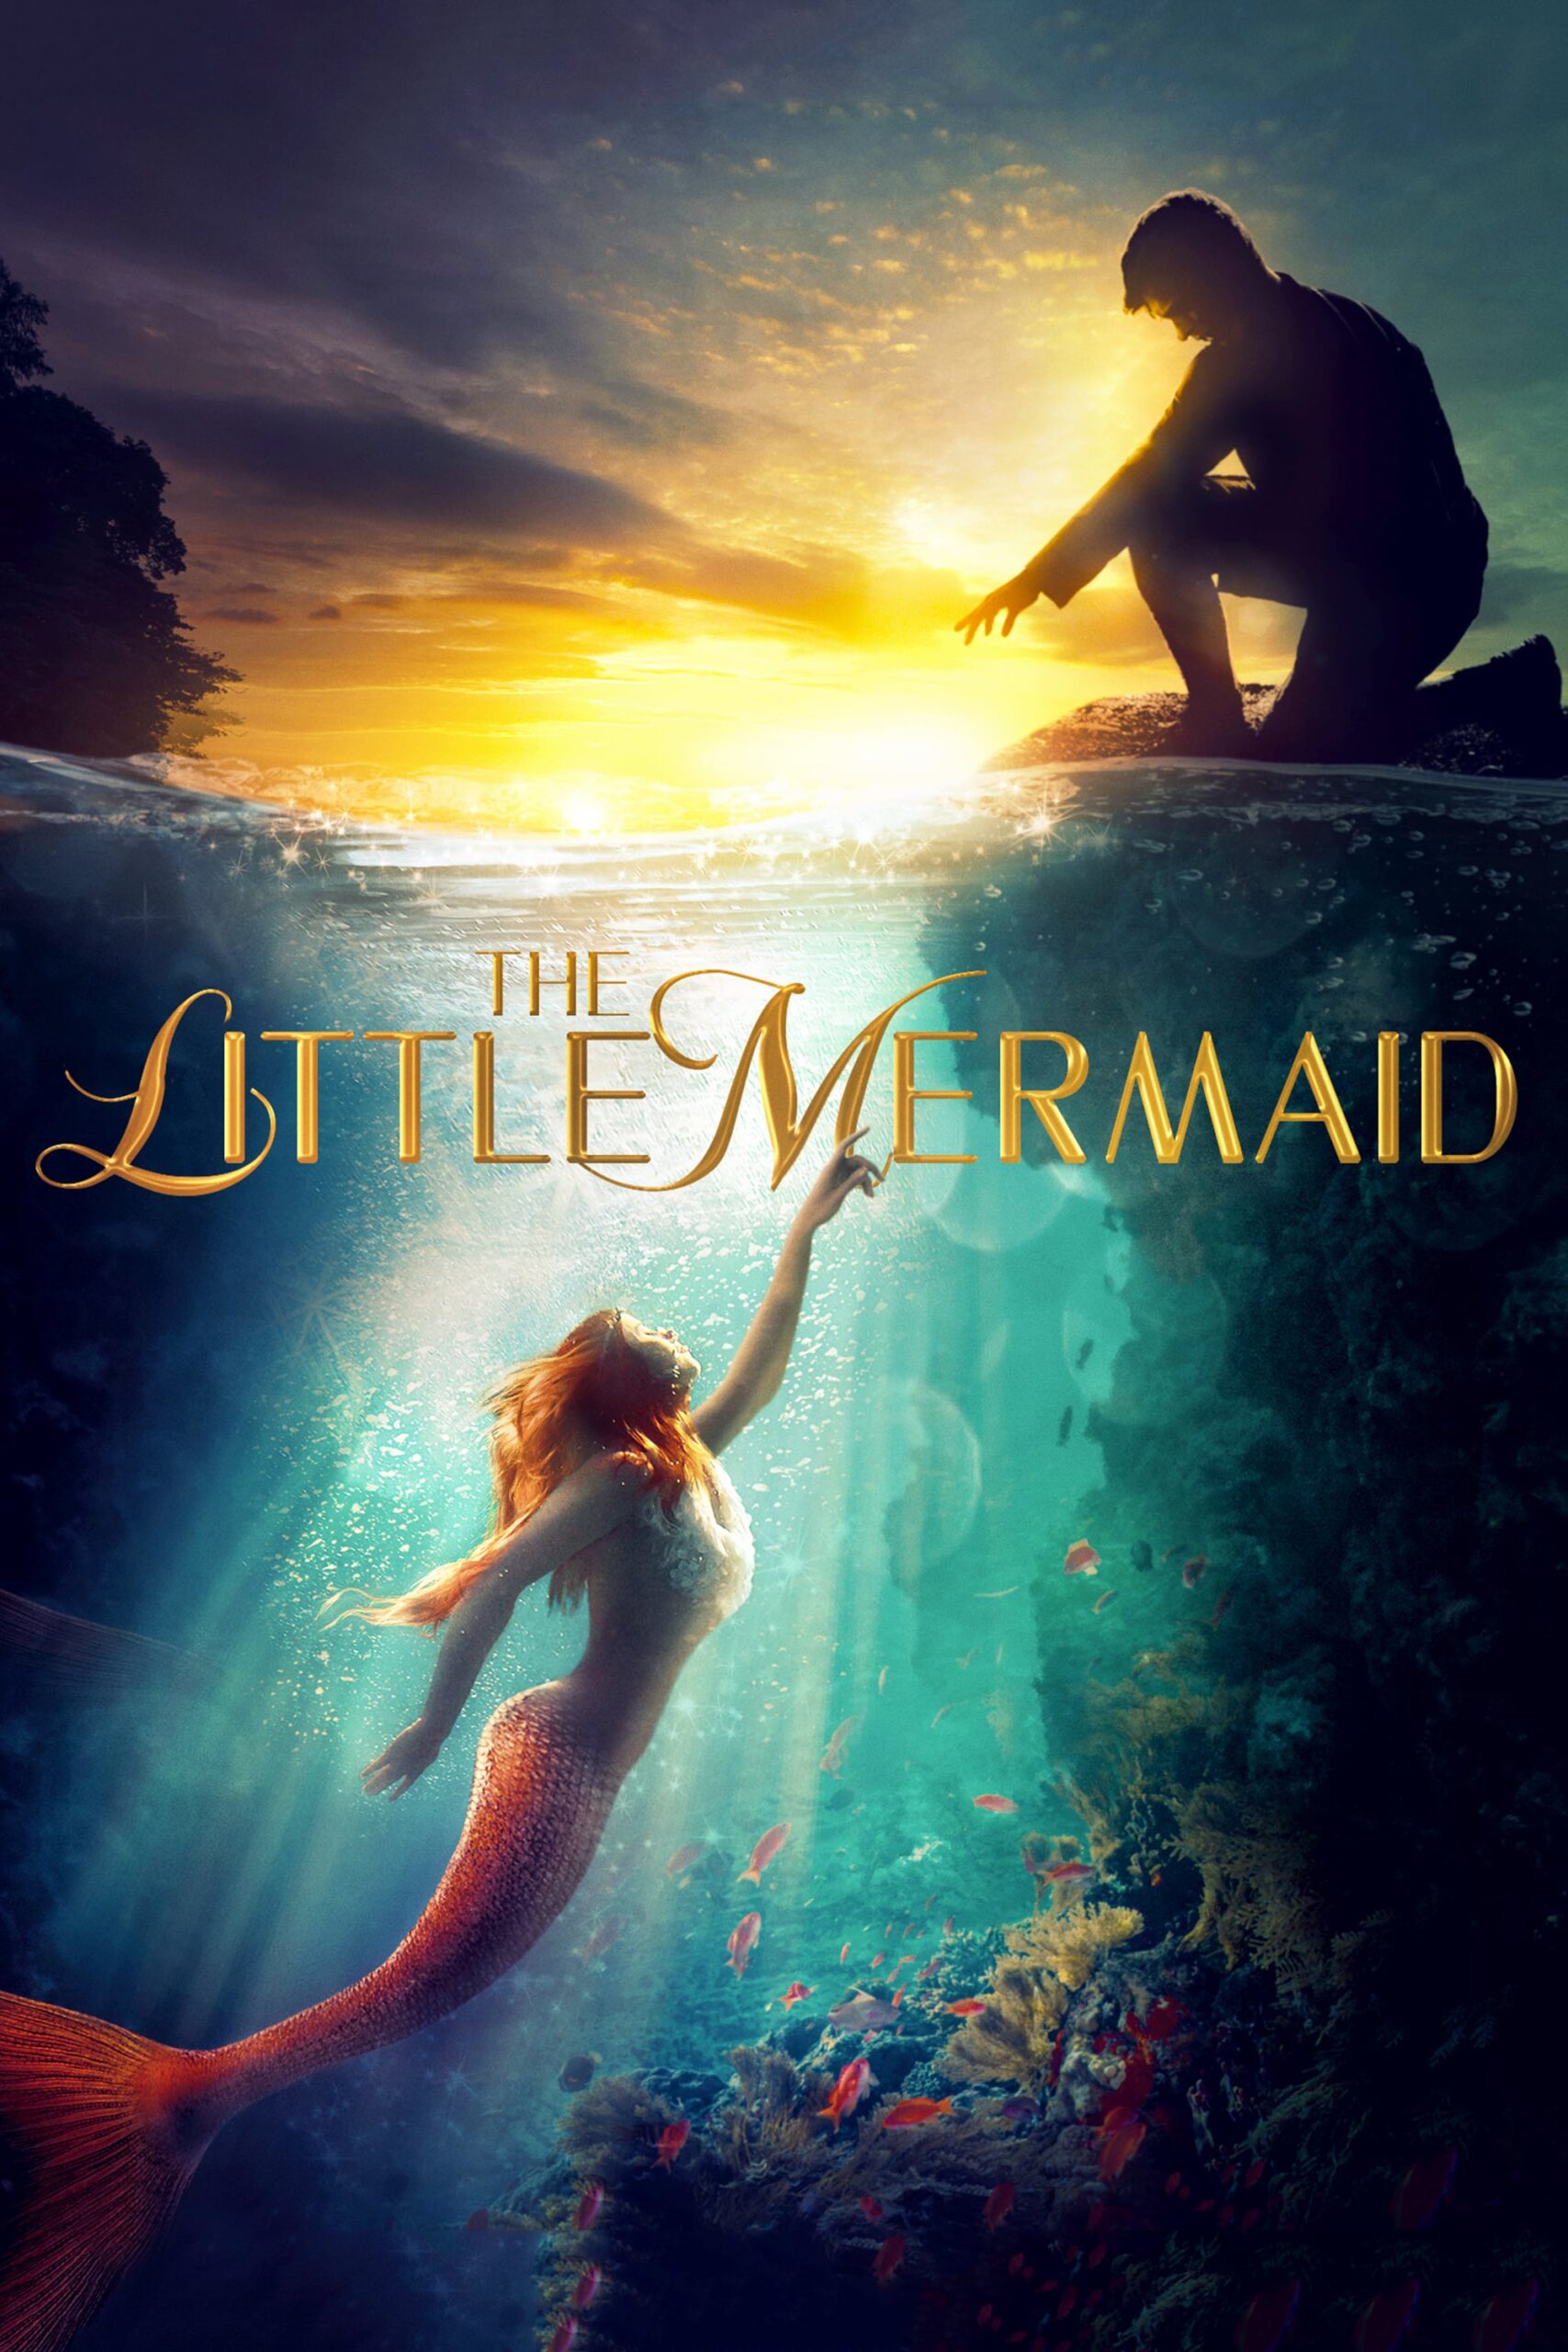 دانلود فیلم The Little Mermaid 2018